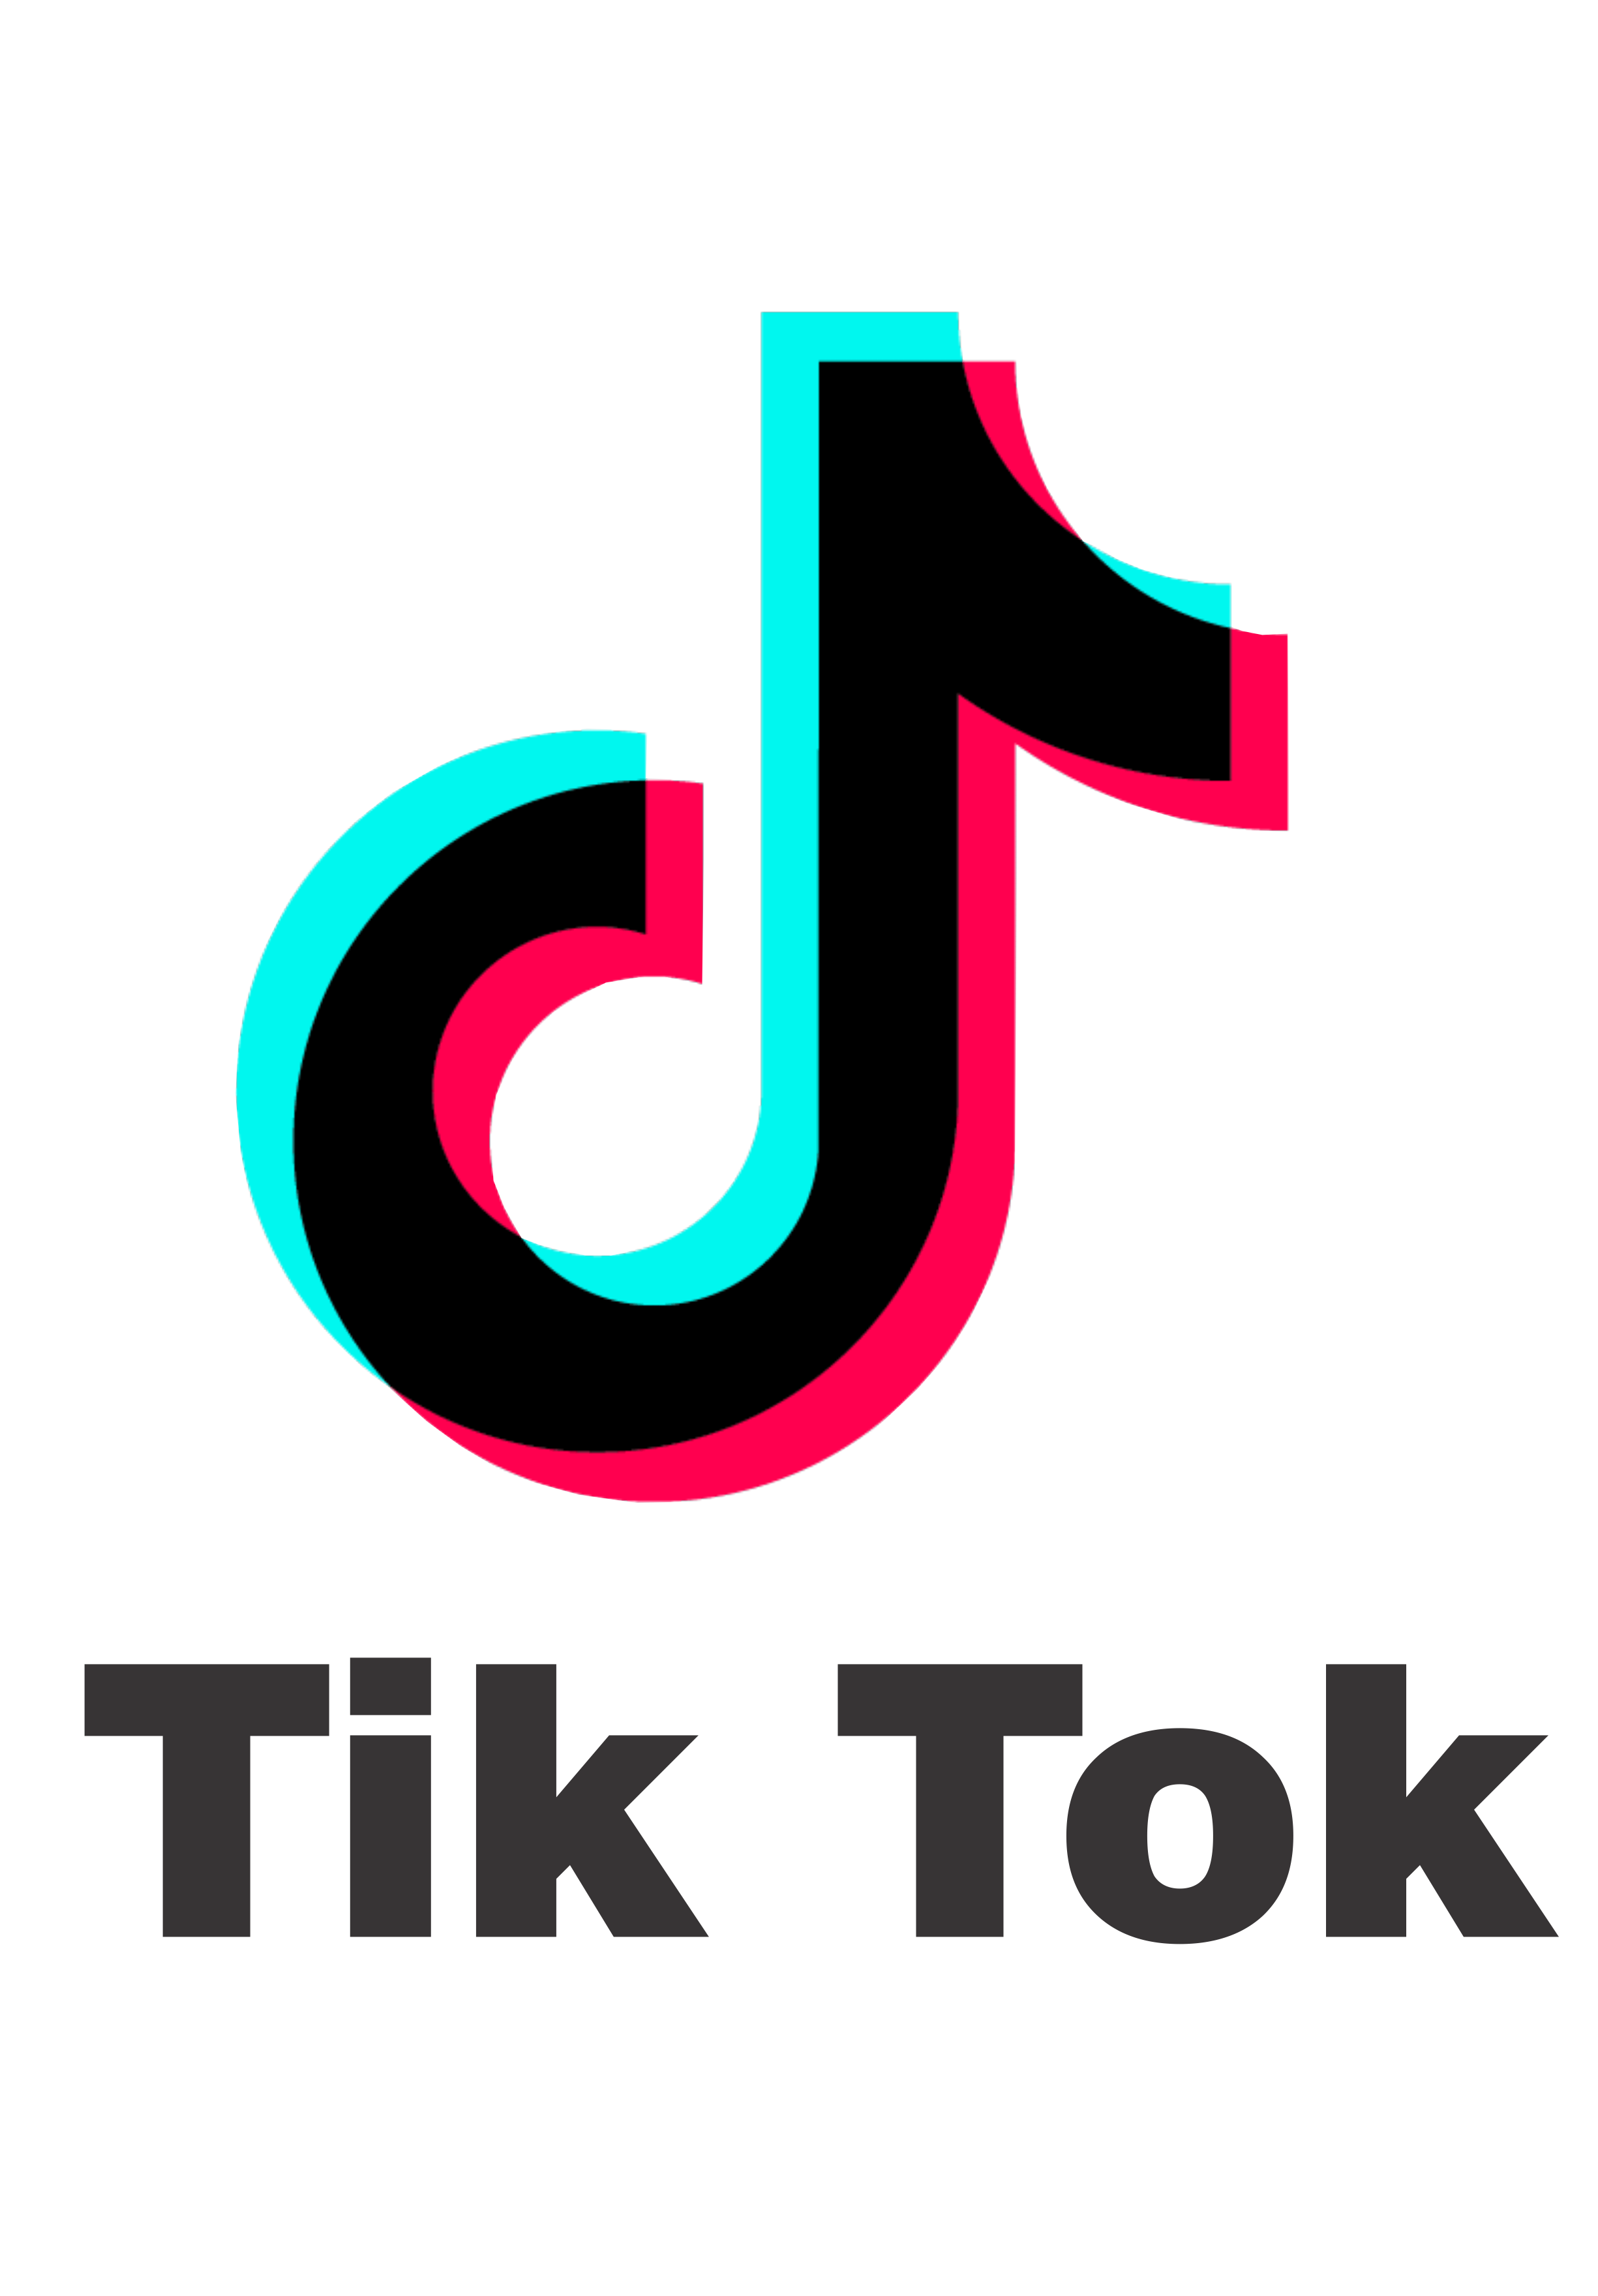 Key Tik Tok Gif Key Tik Tok Logo Descubra E Partilhe Gifs | My XXX Hot Girl